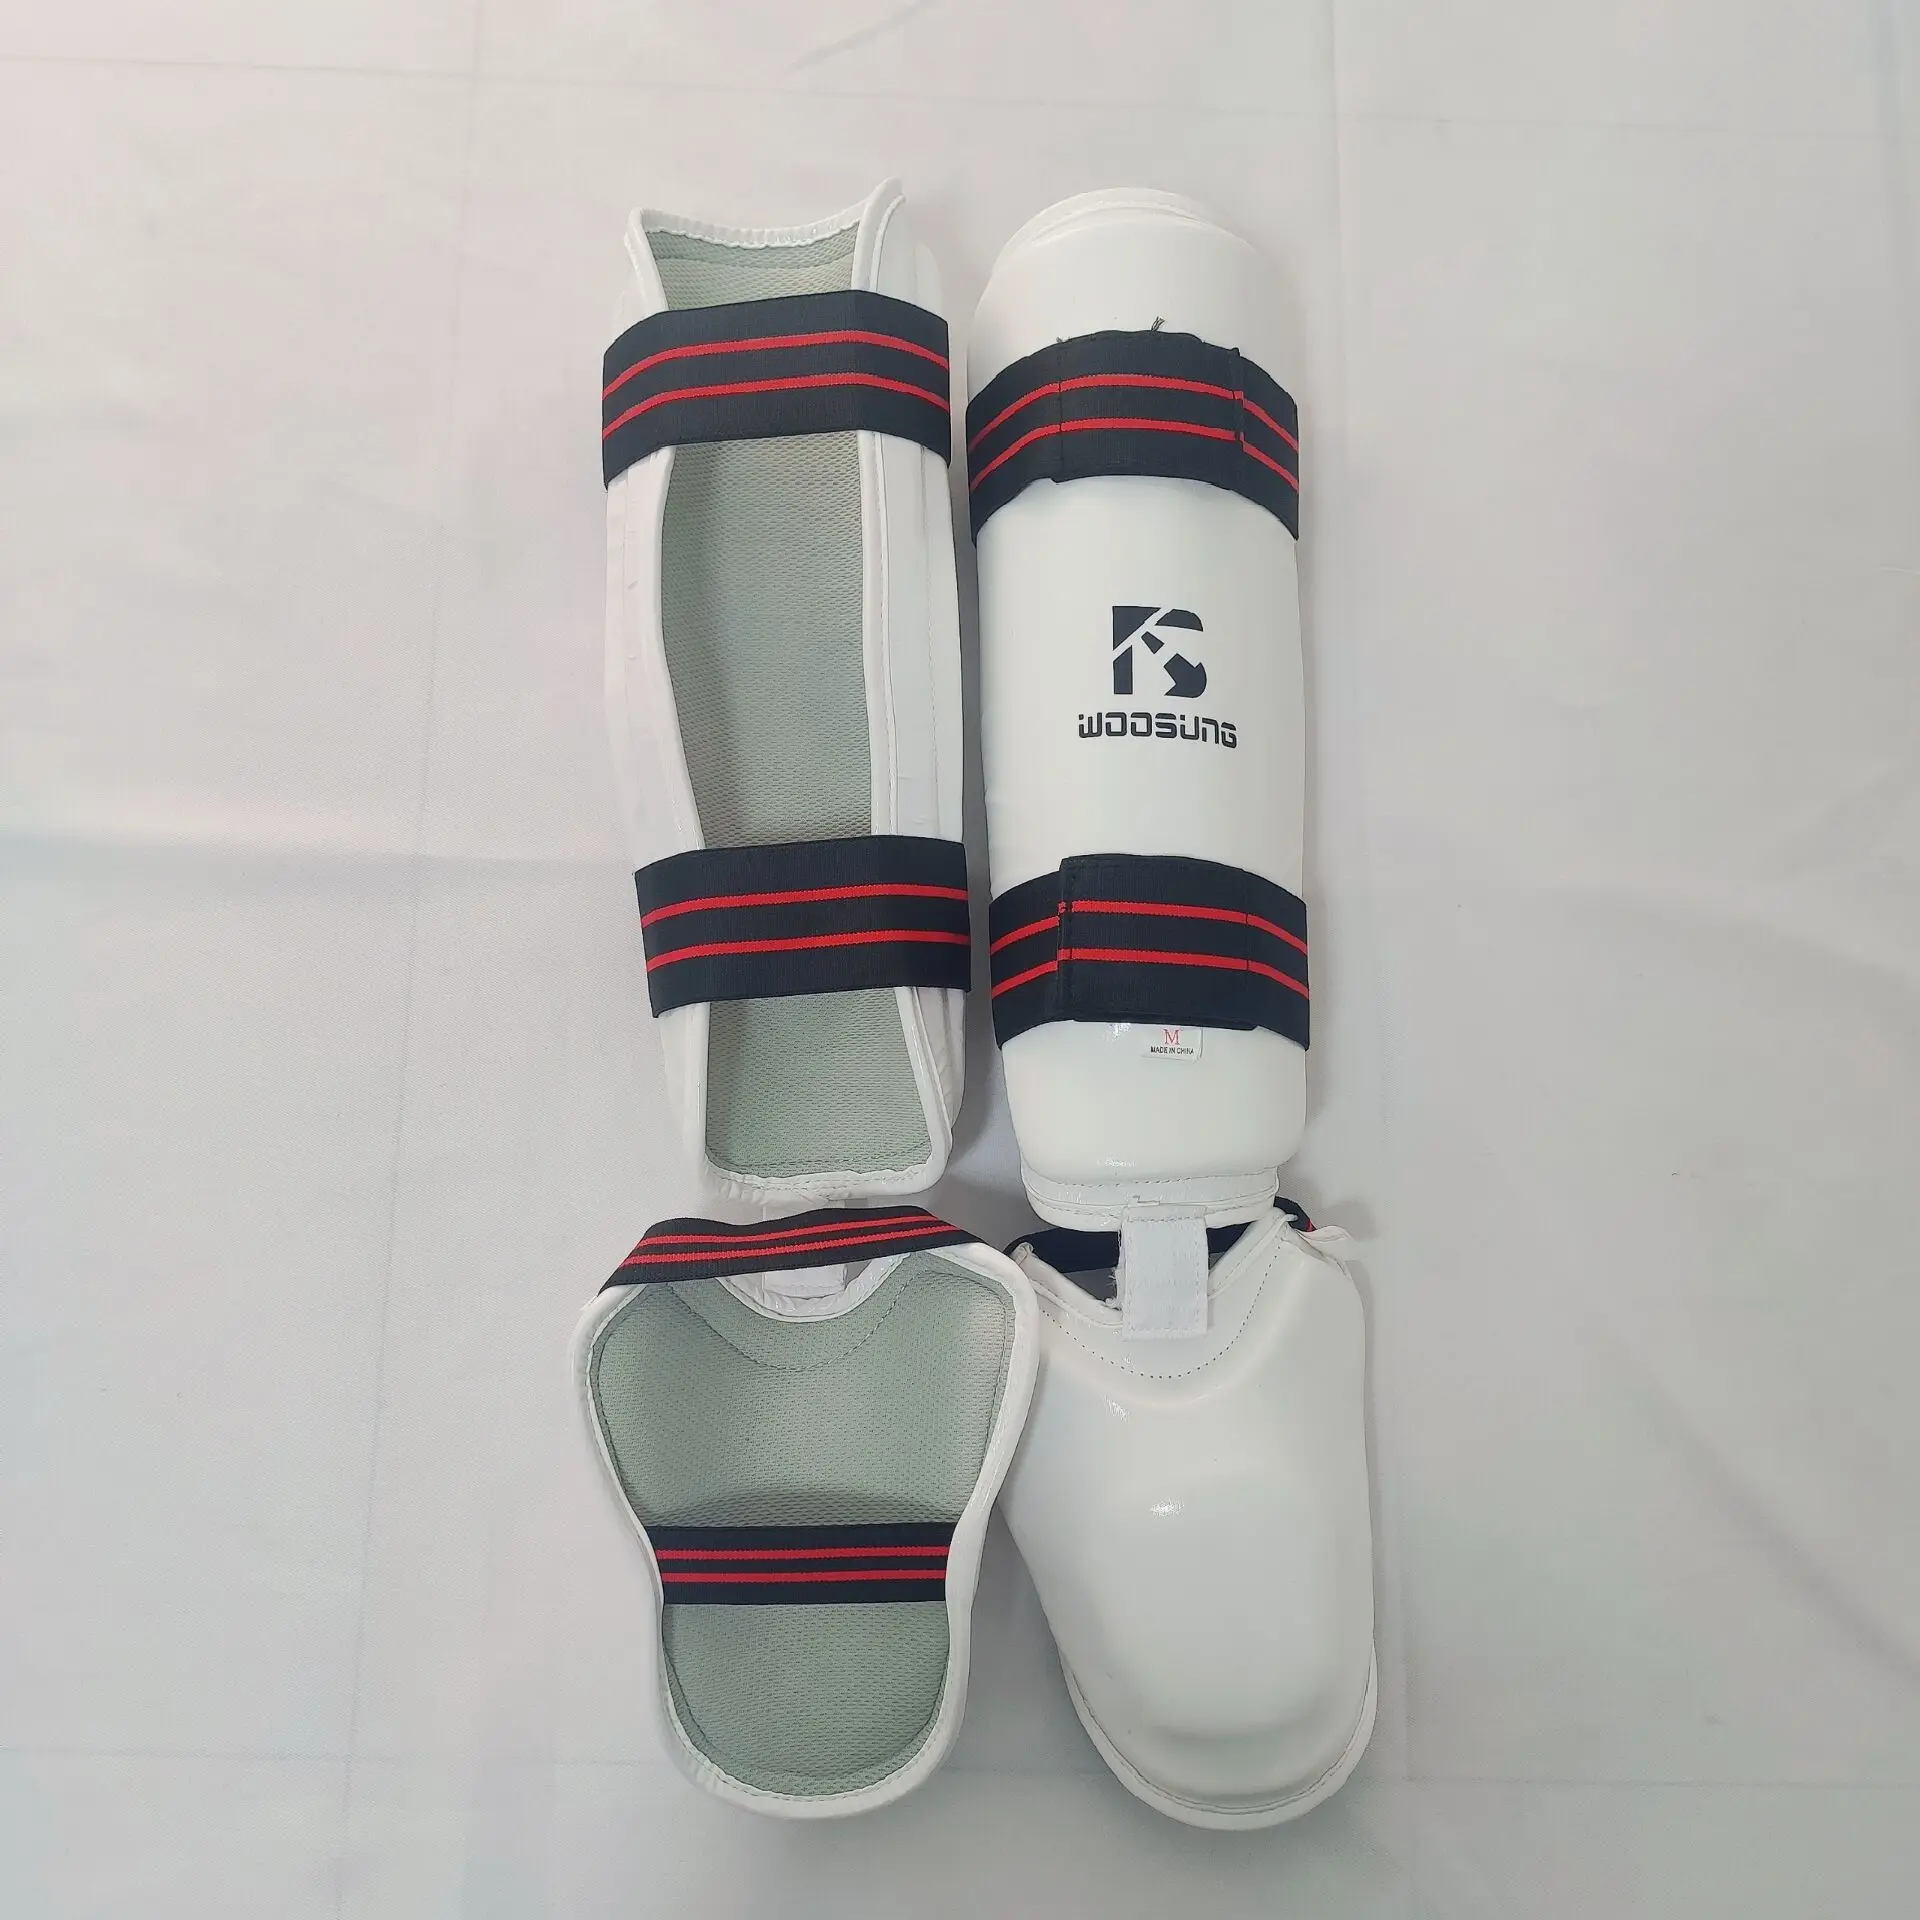 Sample free shipping Wholesale WOOSUNG leg protection equipment in factory including foot boxing Taekwondo karate shin guards